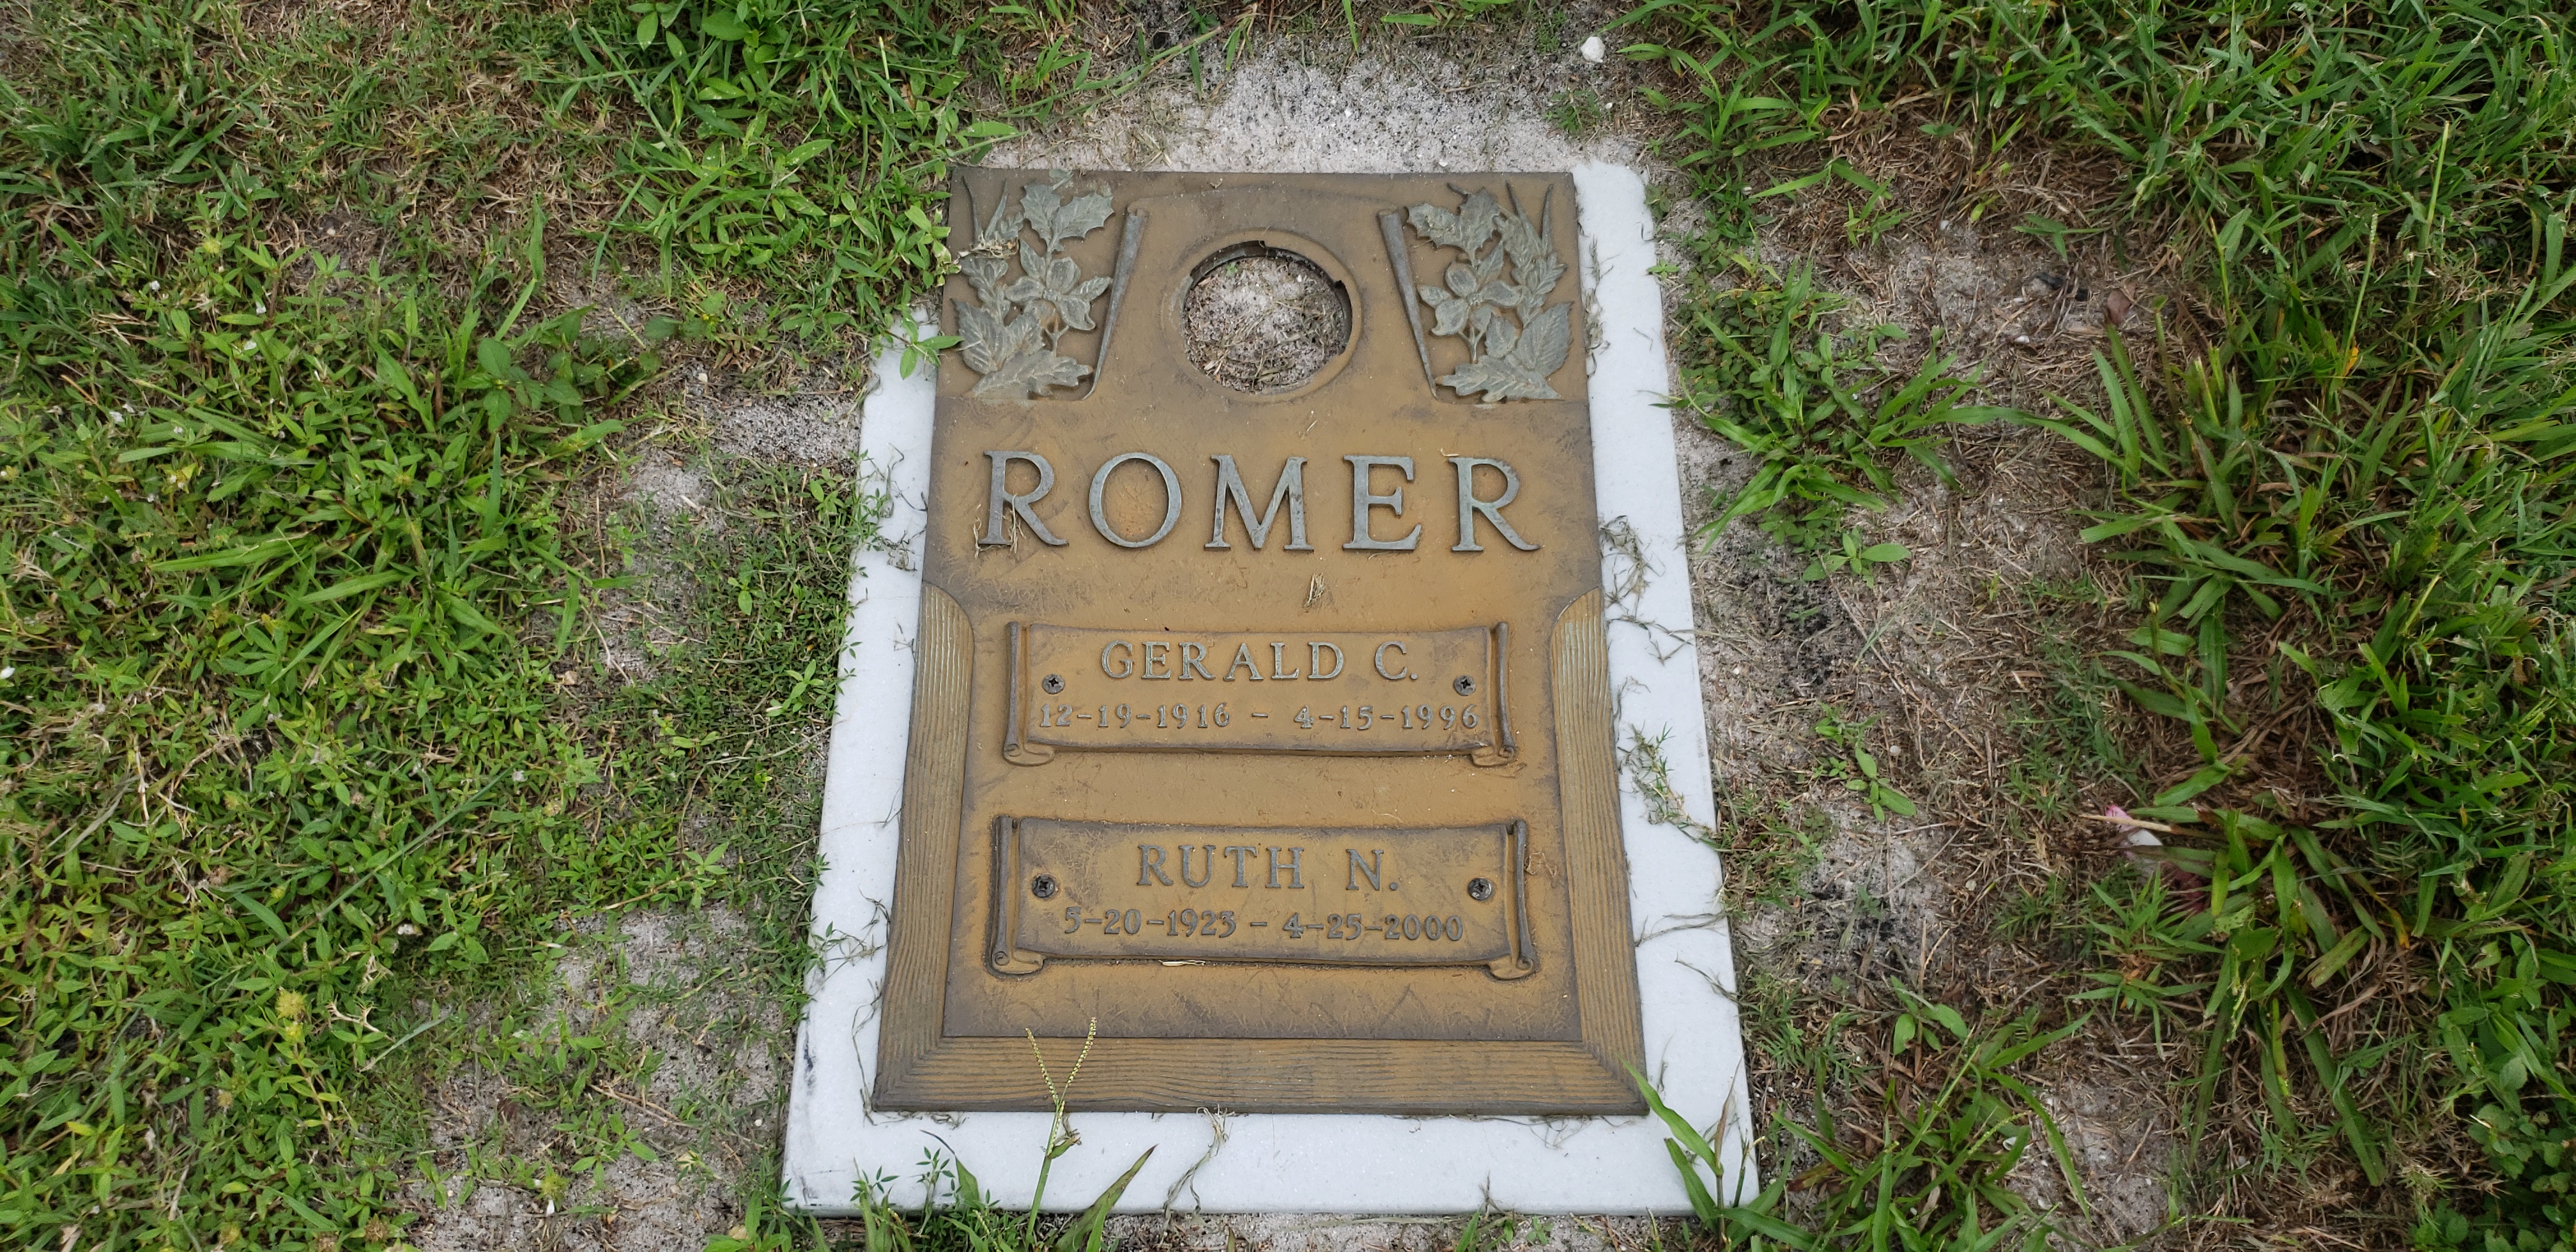 Gerald C Romer